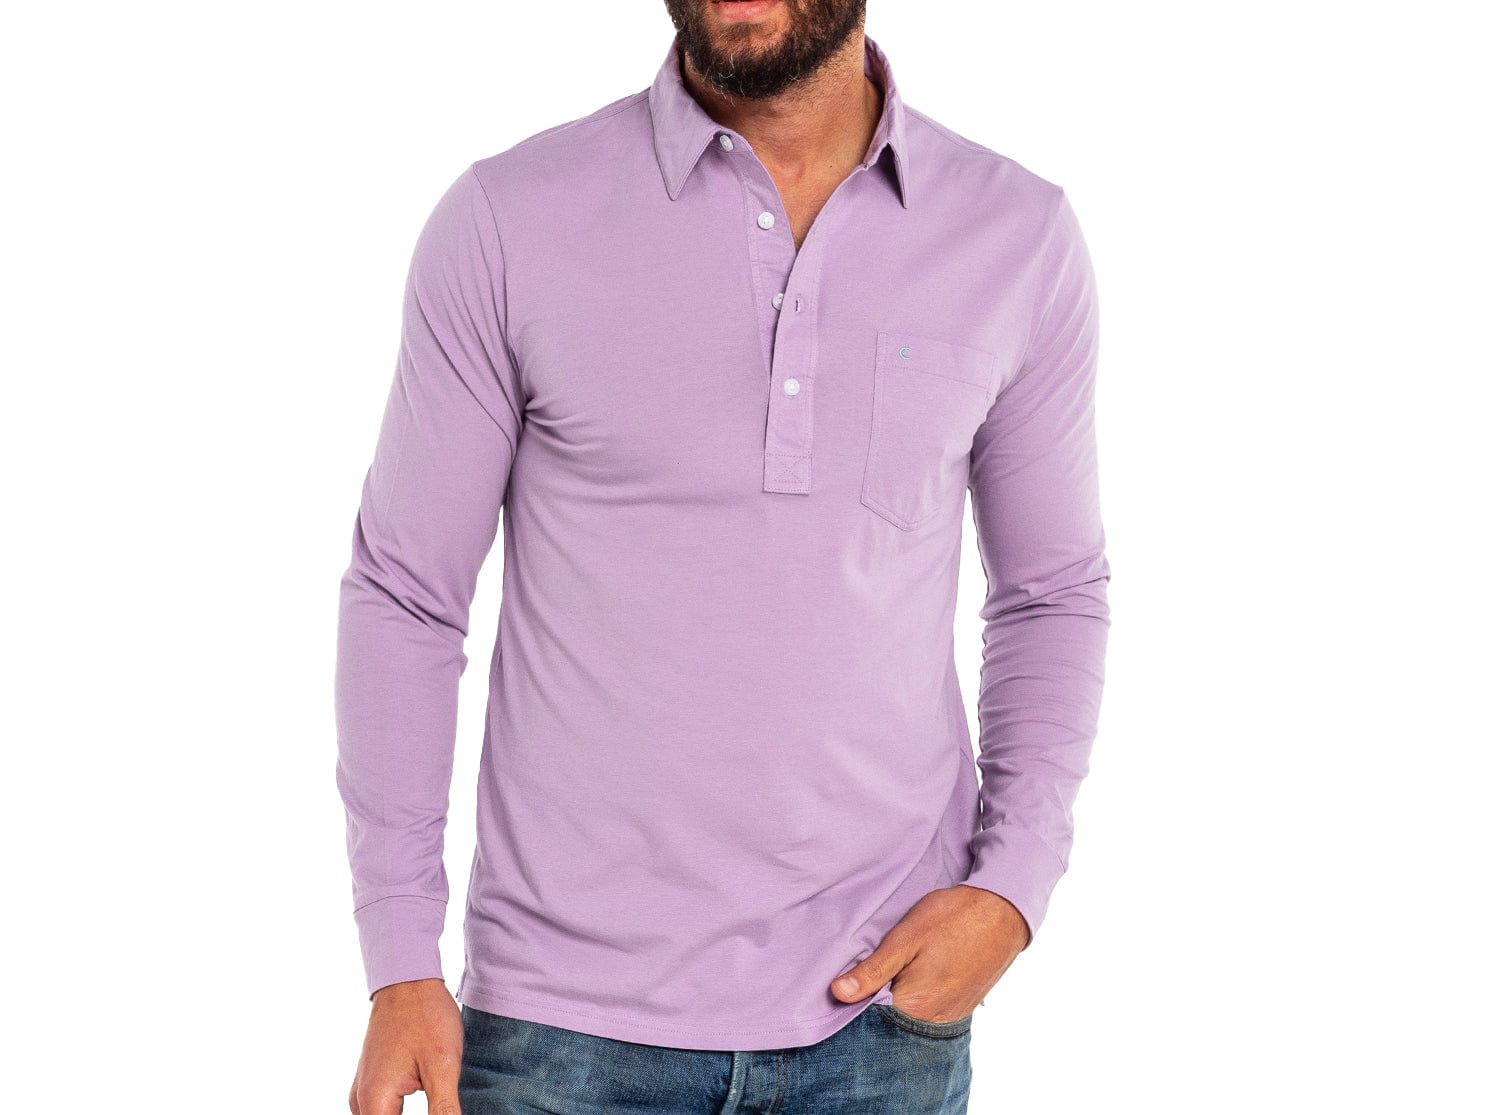 Top-Shelf Long Sleeve Players Shirt - Lavender Haze